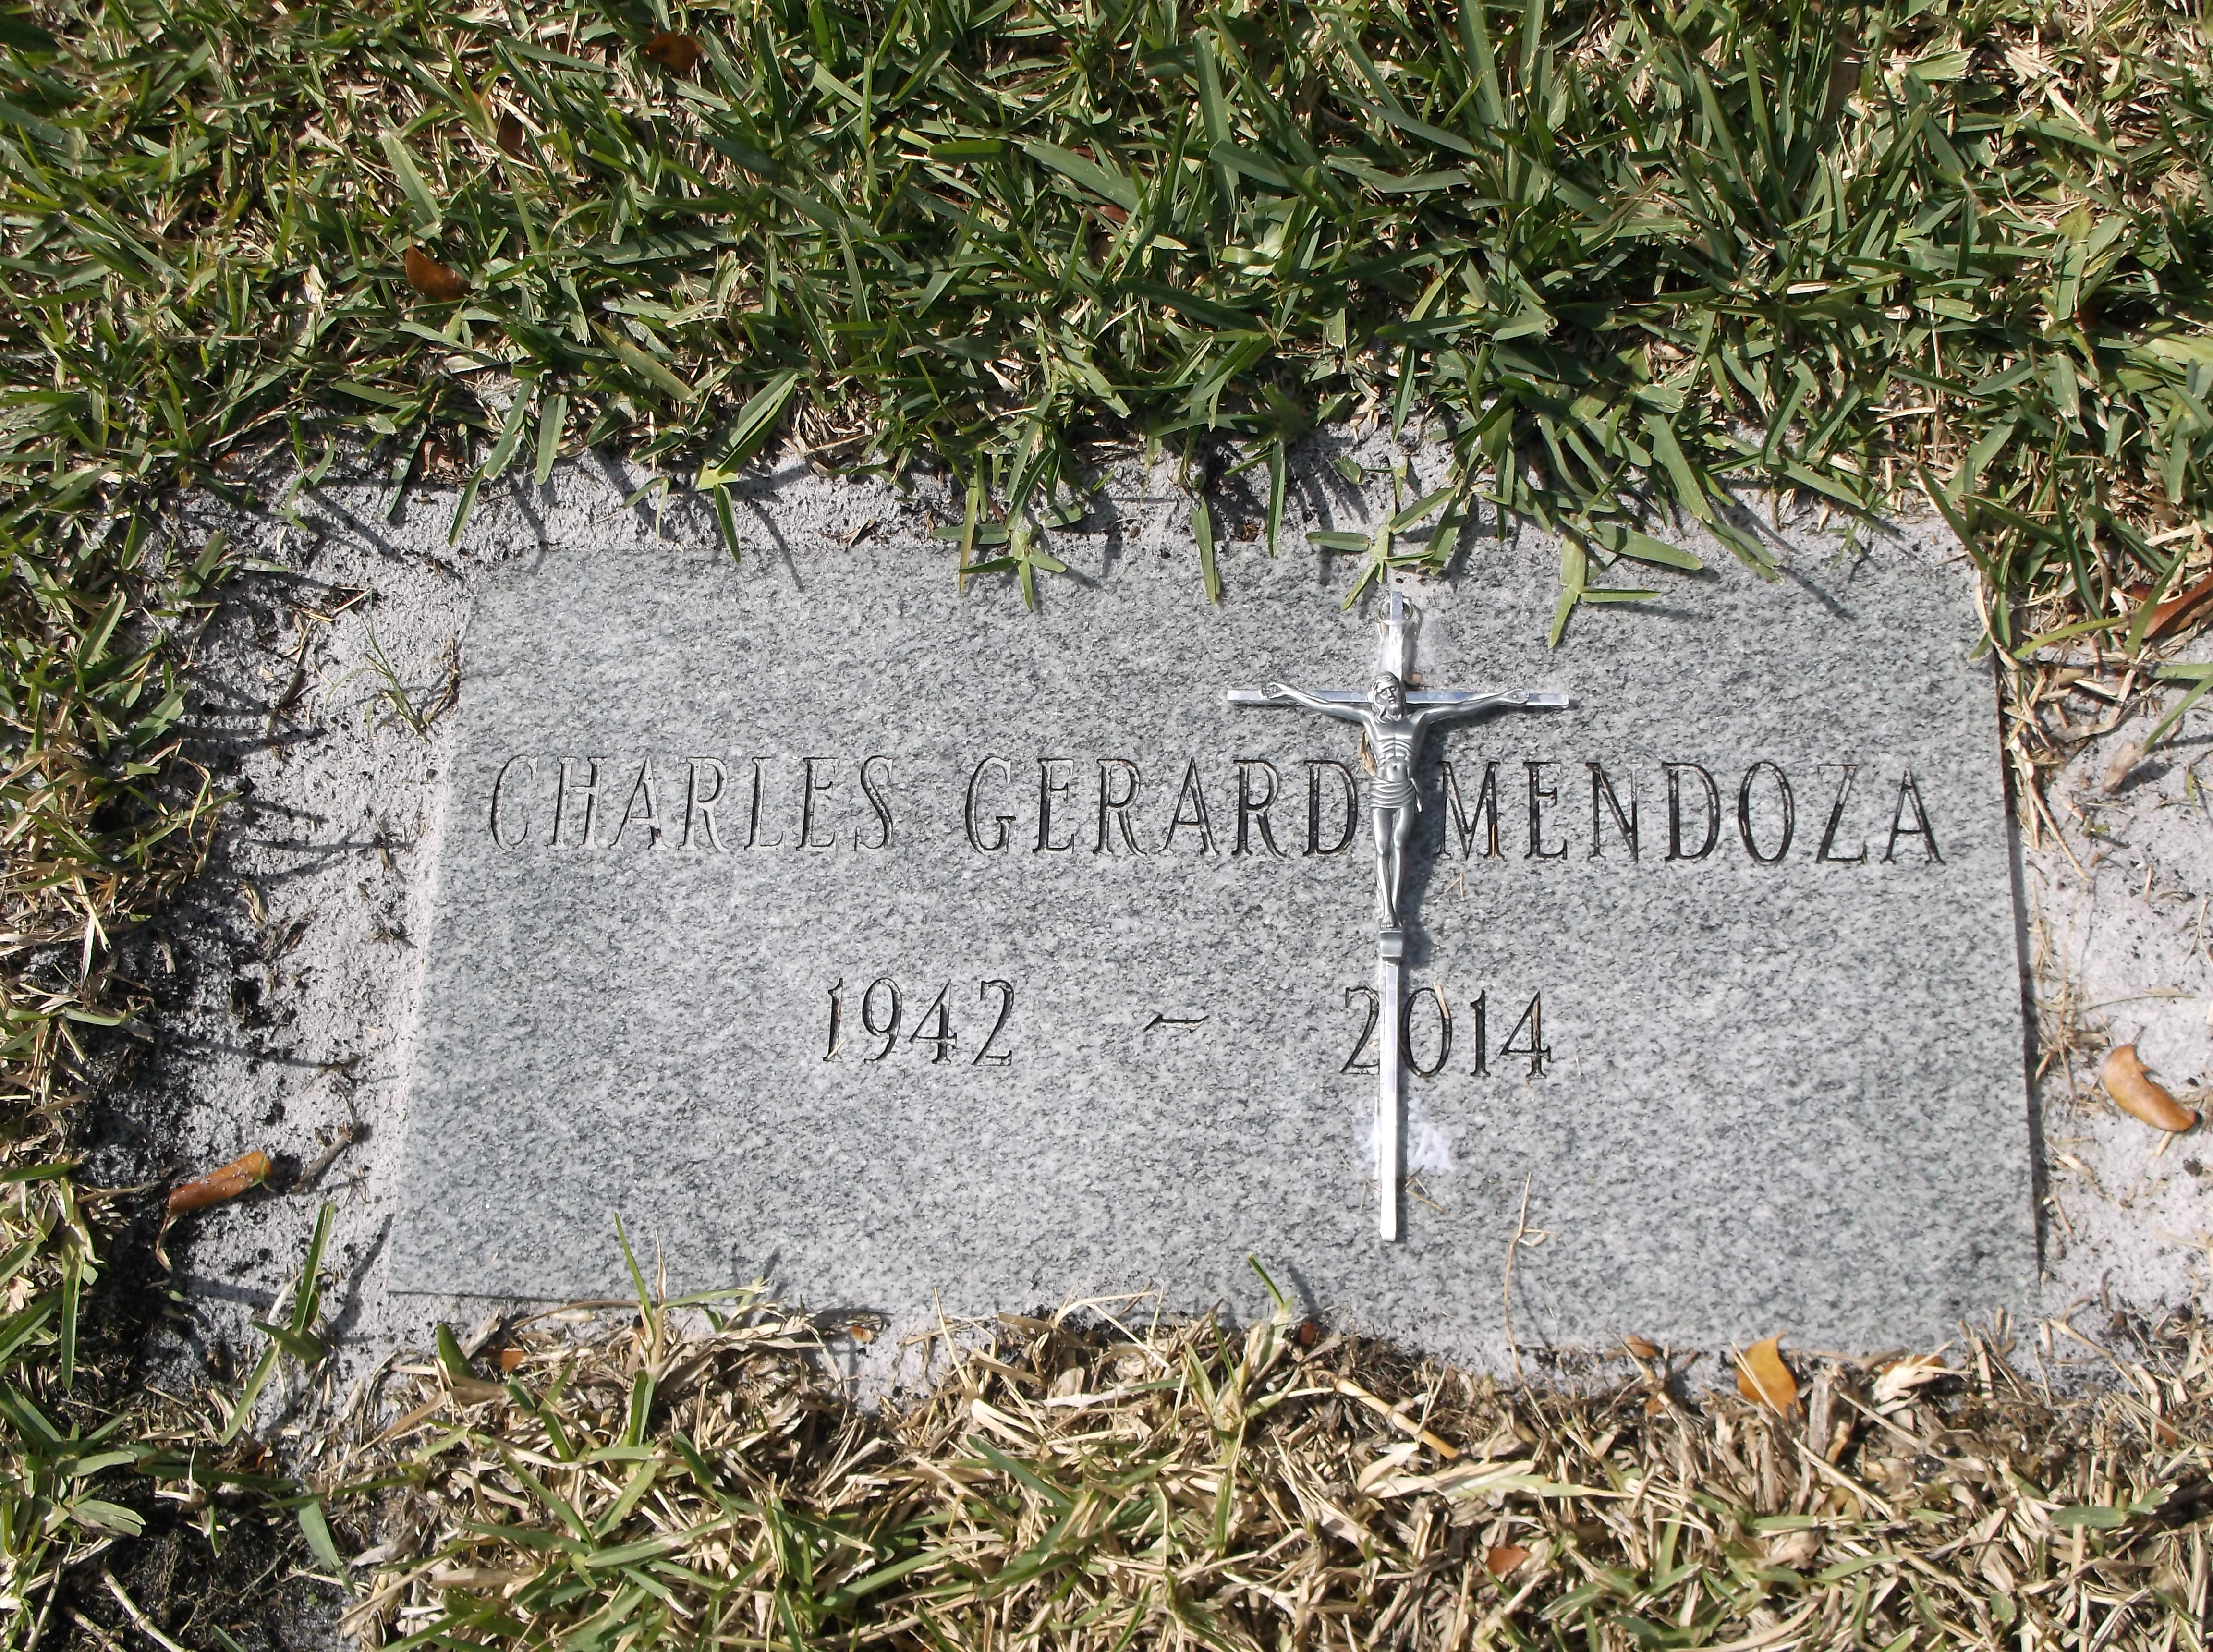 Charles Gerard Mendoza